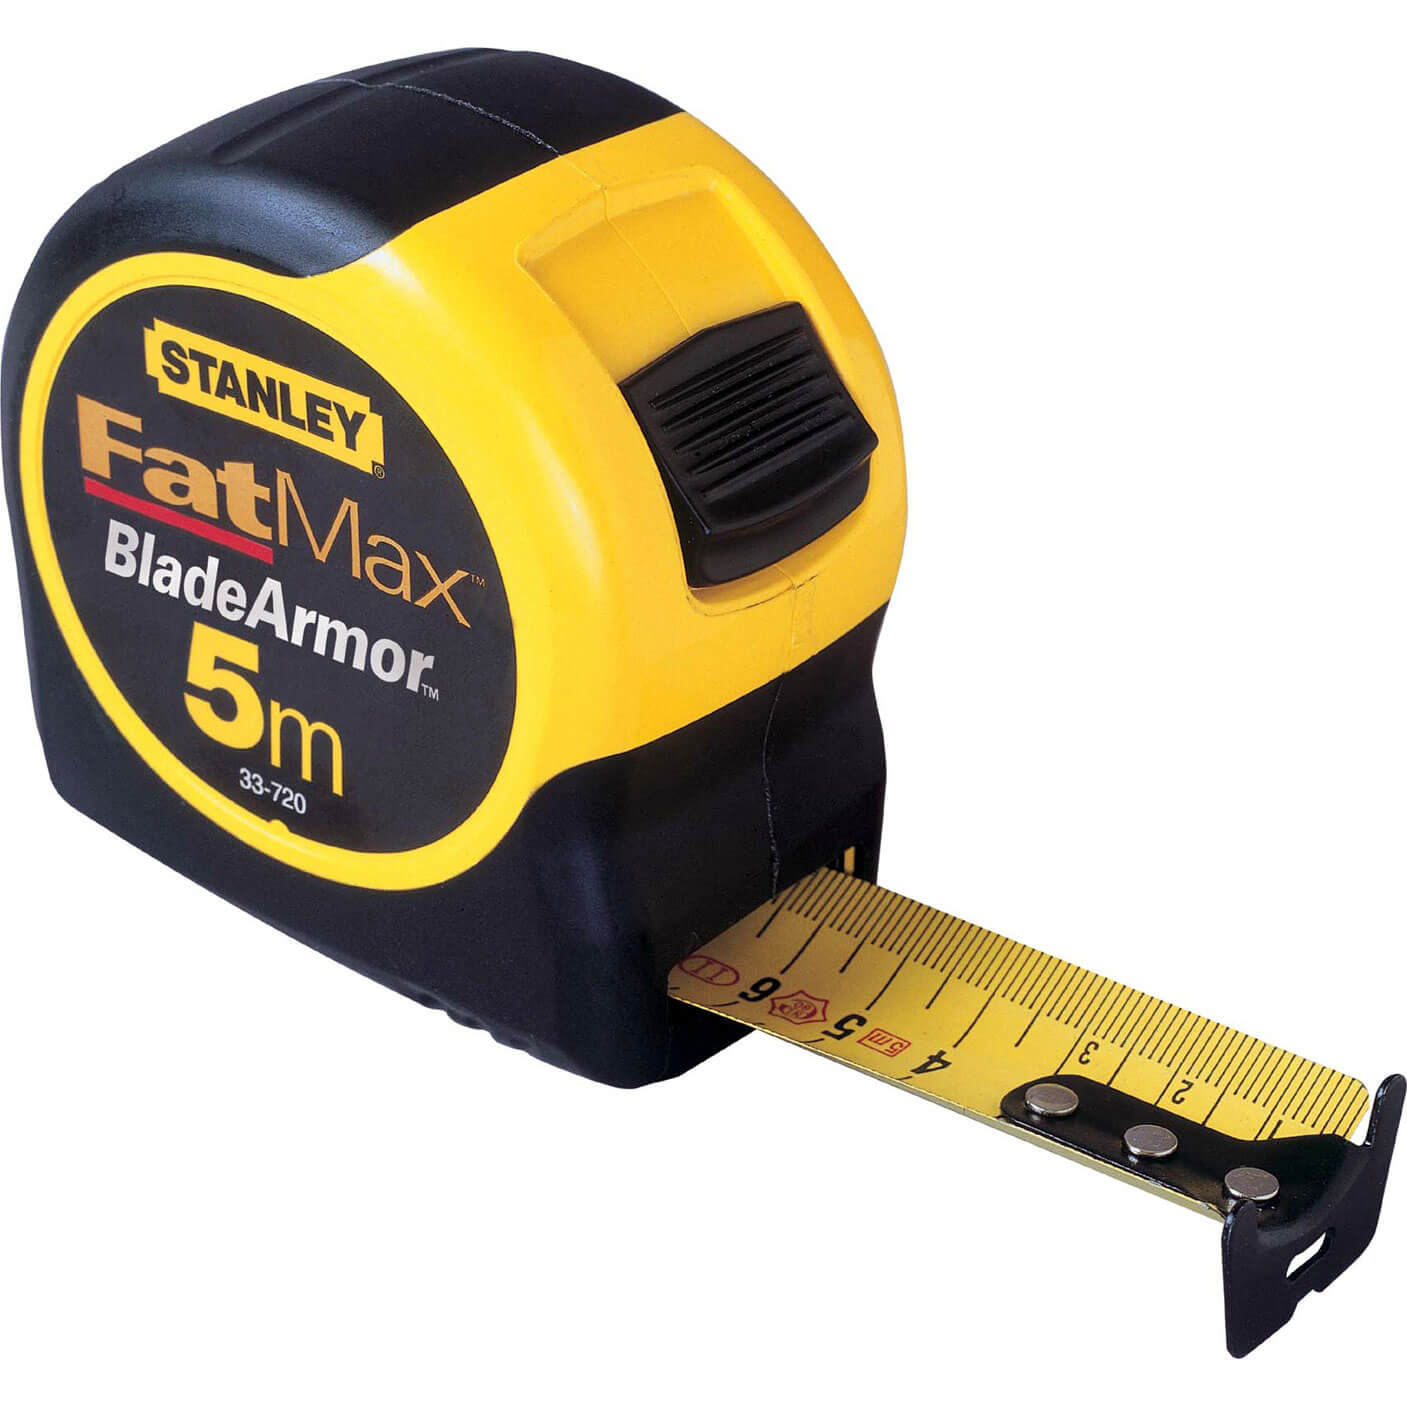 Photo of Stanley Fatmax Blade Armor Tape Measure Metric 5m 32mm